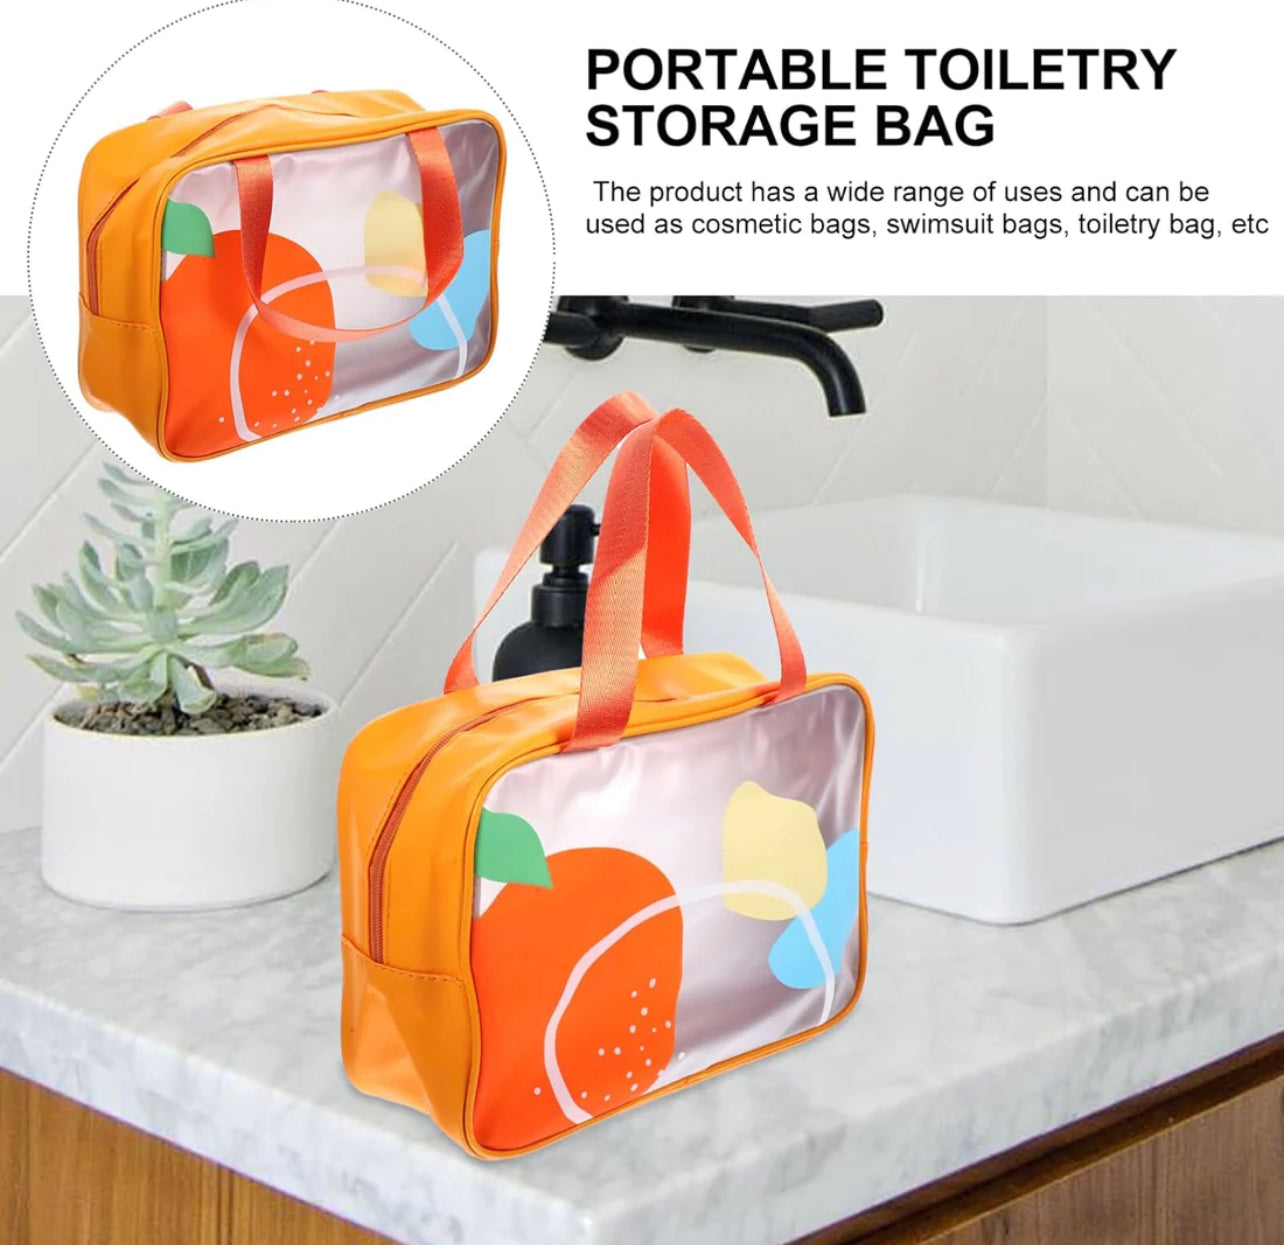 Versatile and Stylish: Medium Waterproof Fruit Theme Multipurpose Storage Bag